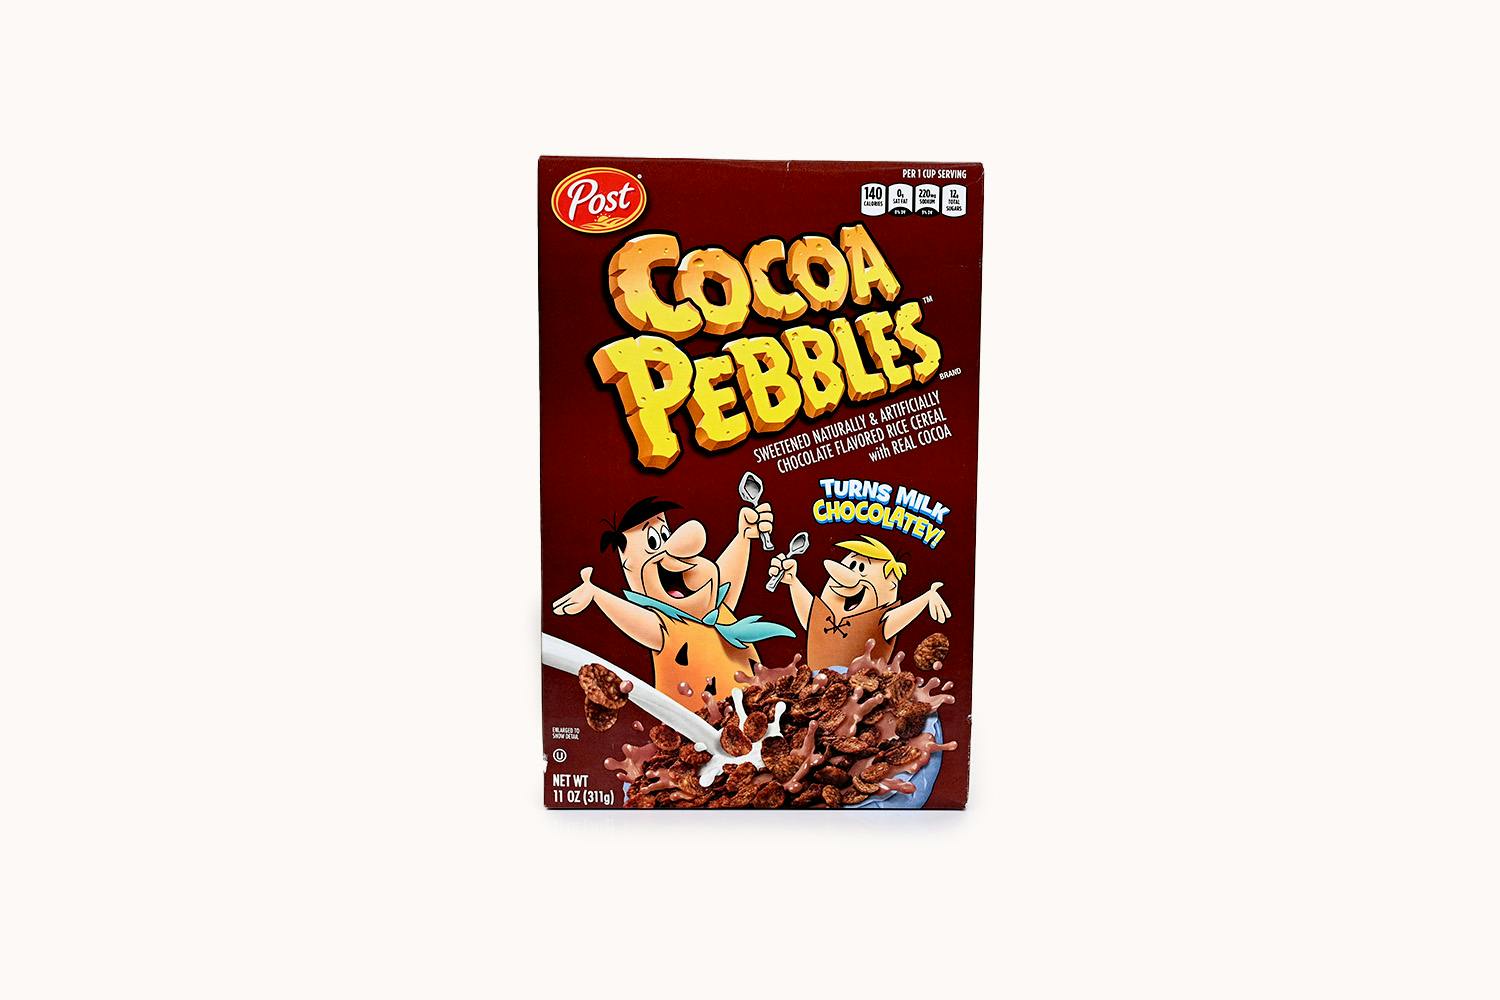 Post Cereal Cocoa Pebbles